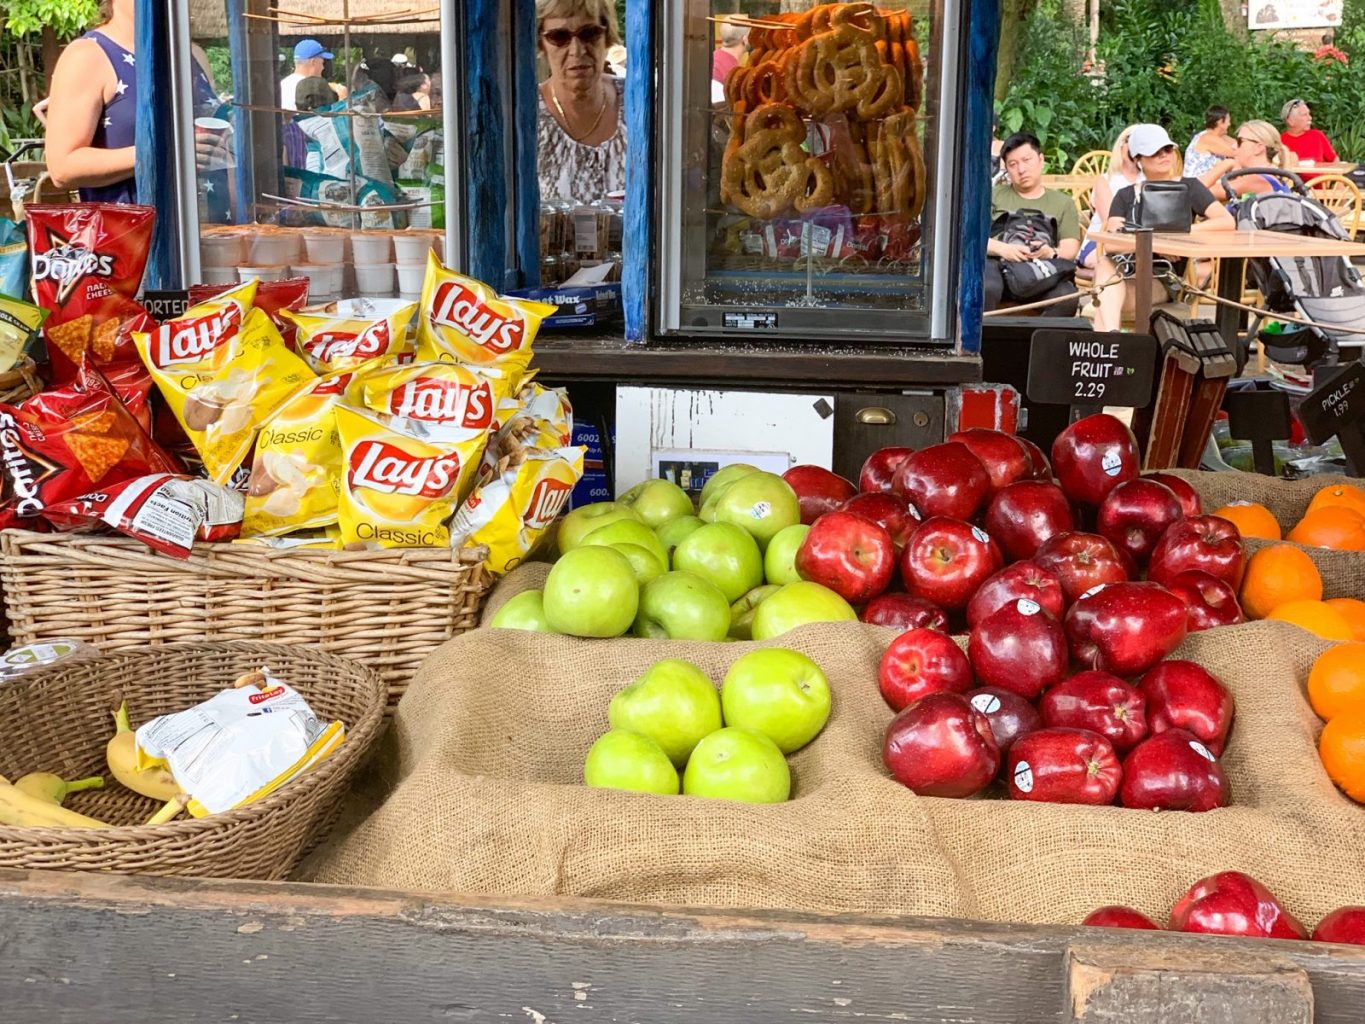 animal kingdom breakfast Harambe fruit market apples, bananas, and assorted snacks